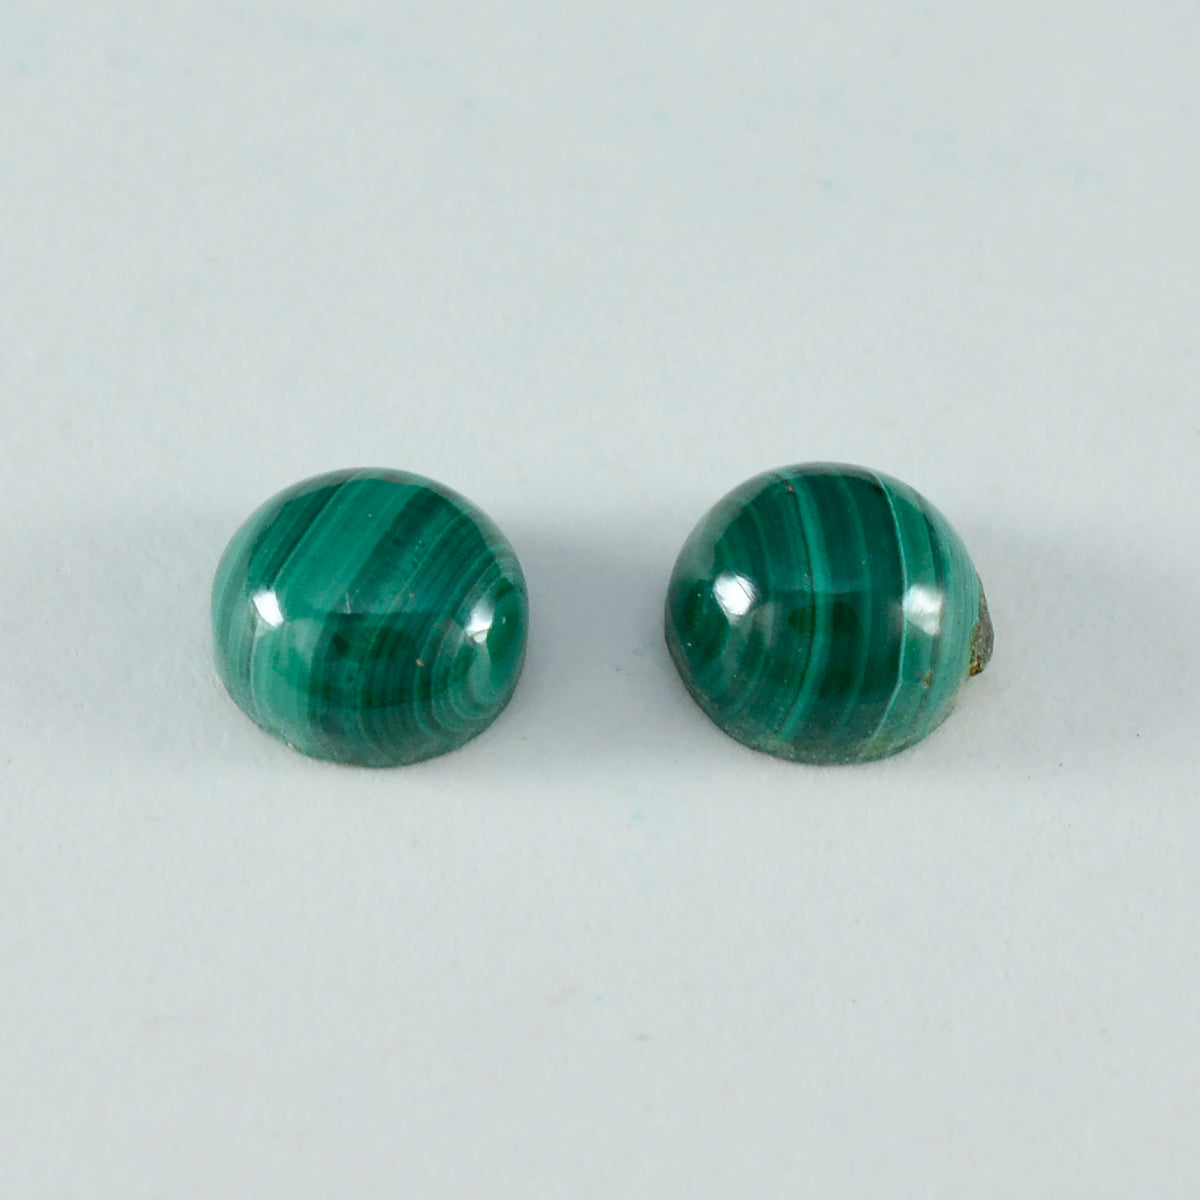 Riyogems 1PC Green Malachite Cabochon 5x5 mm Round Shape nice-looking Quality Gemstone